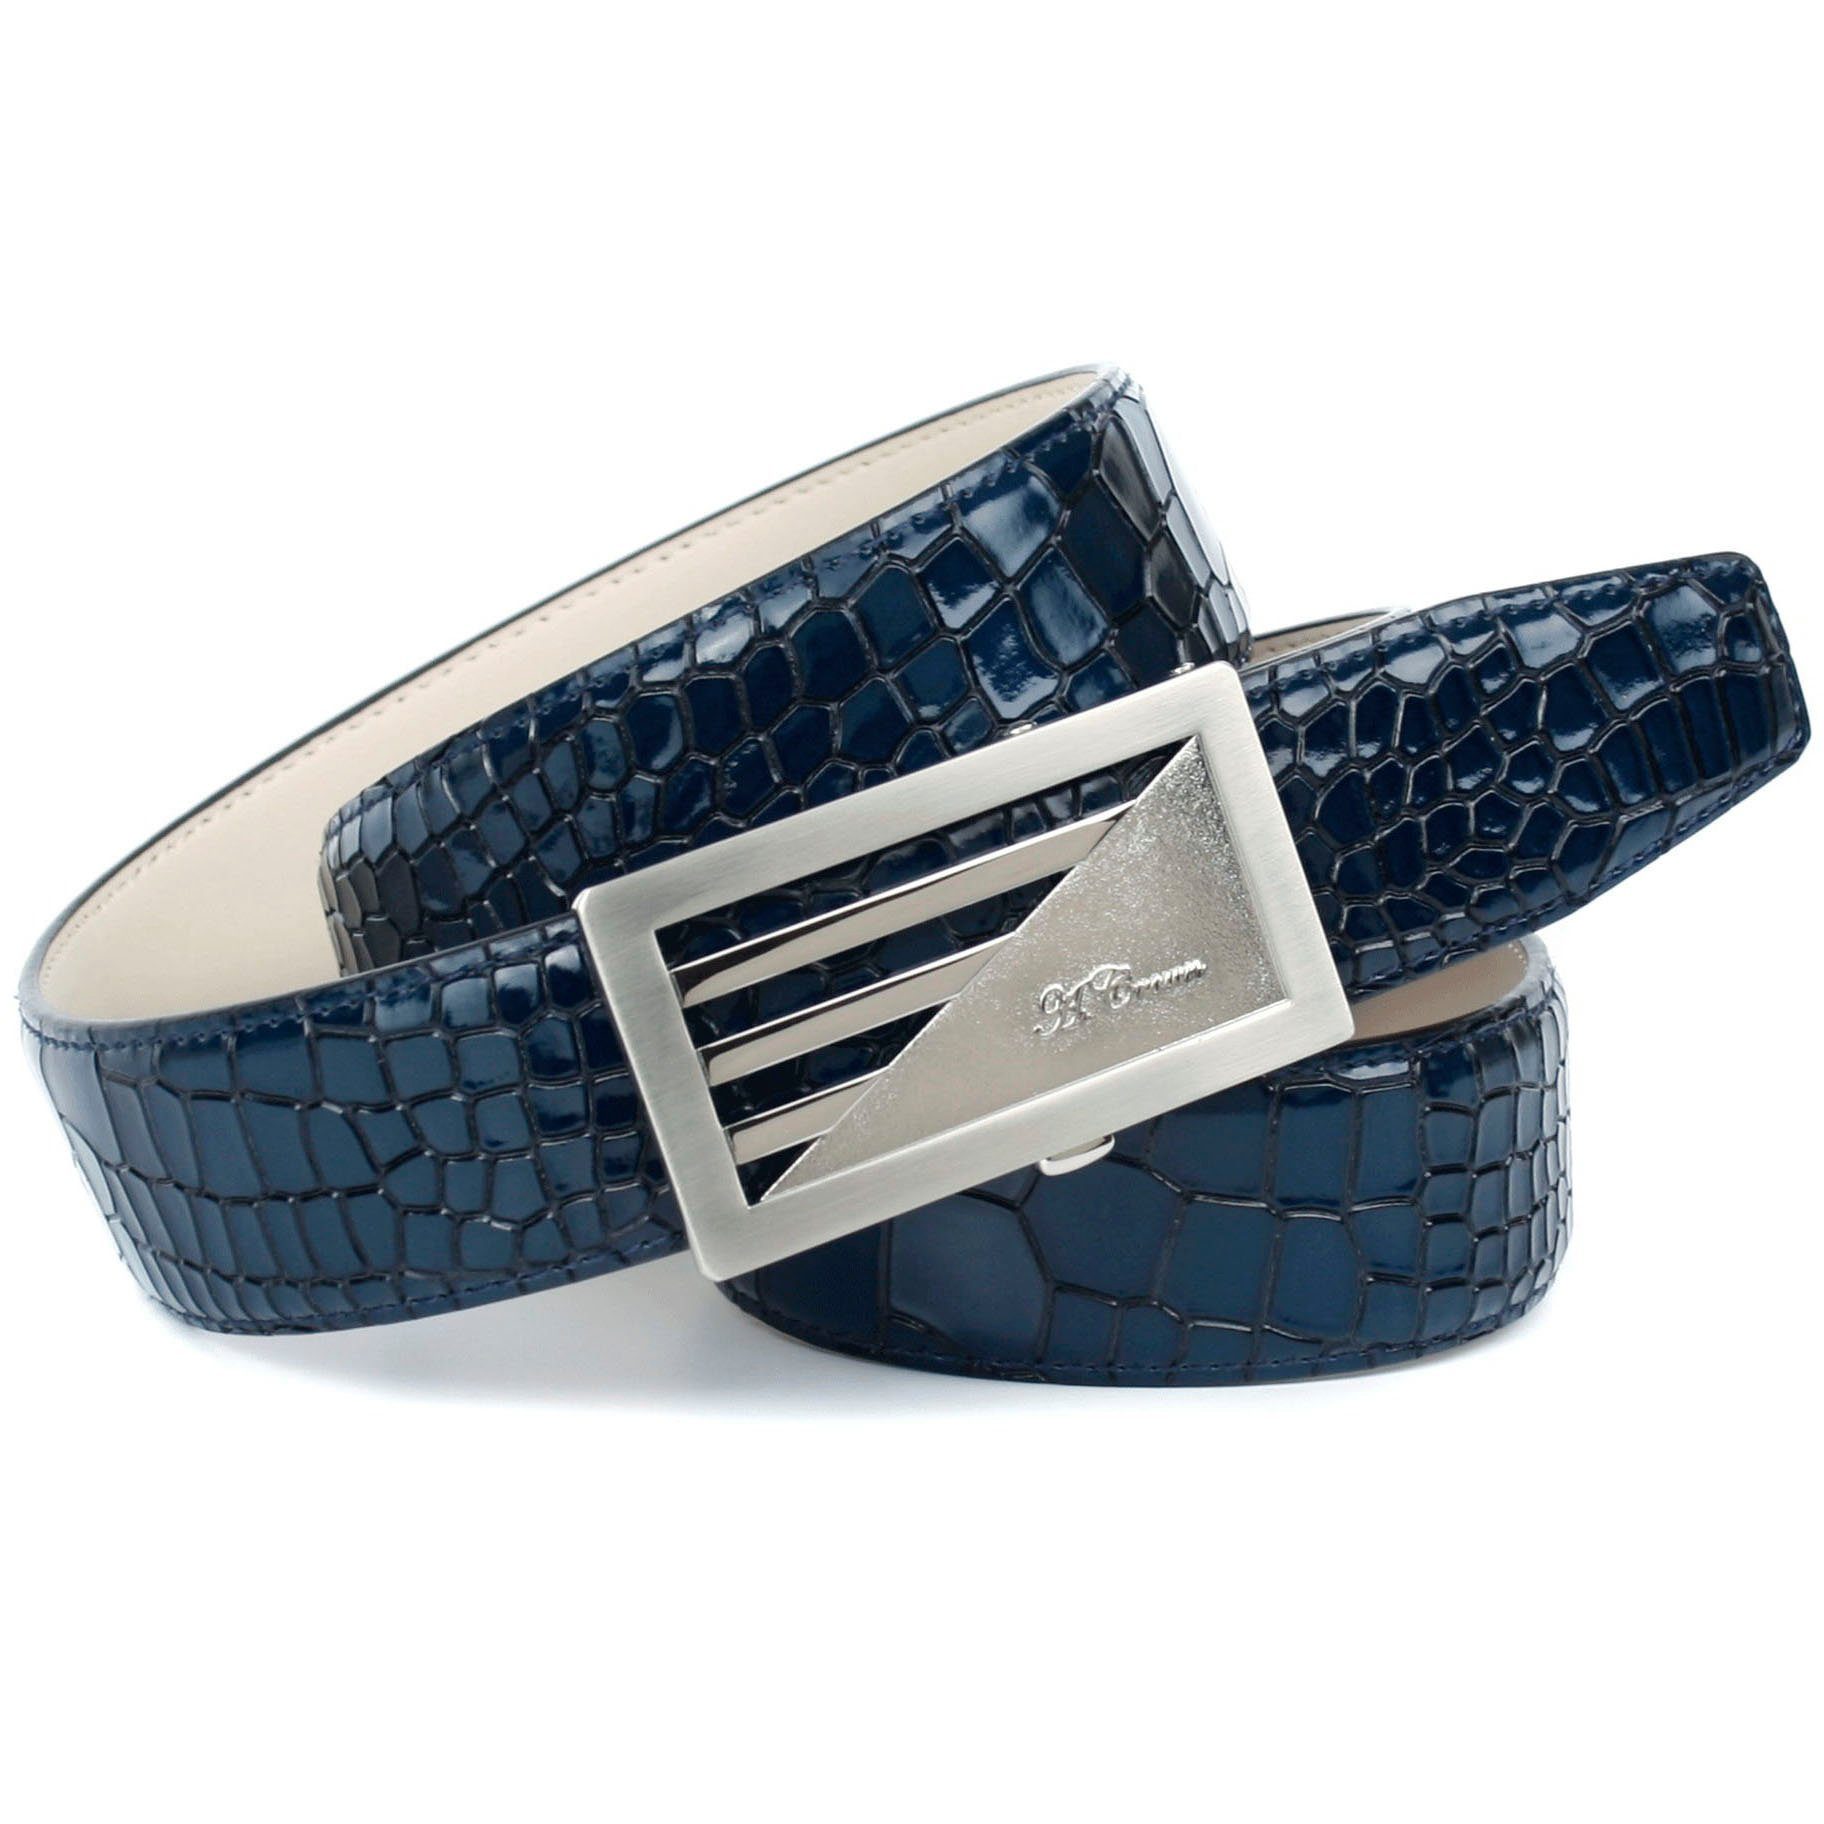 Anthoni Crown Ledergürtel in blau Kroko-Design in